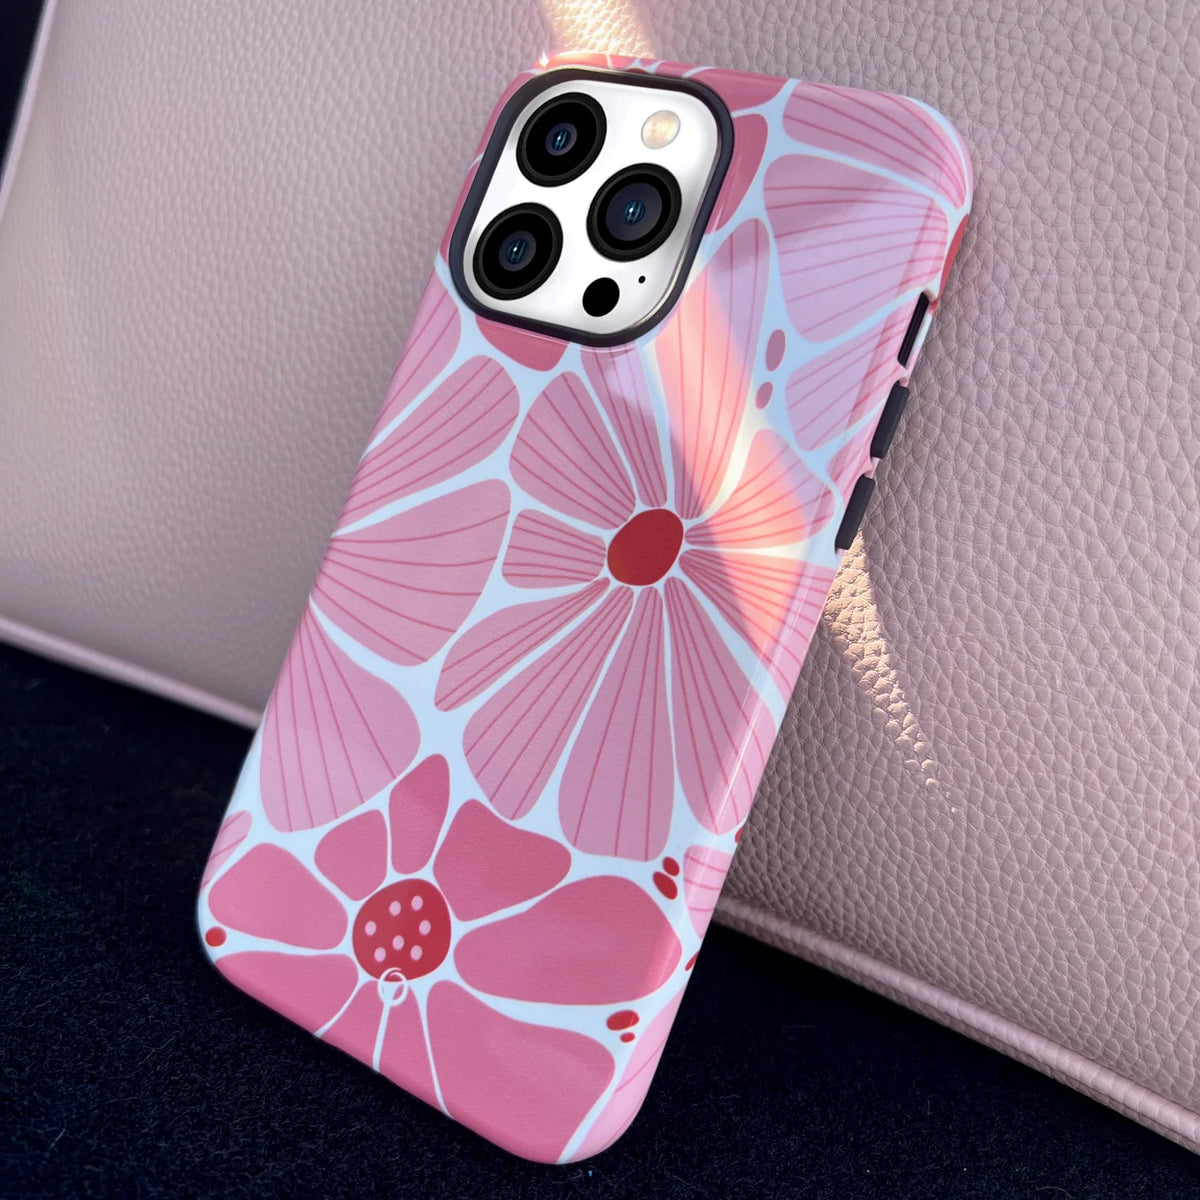 Floral Blast iPhone Case - iPhone 11 Pro Max